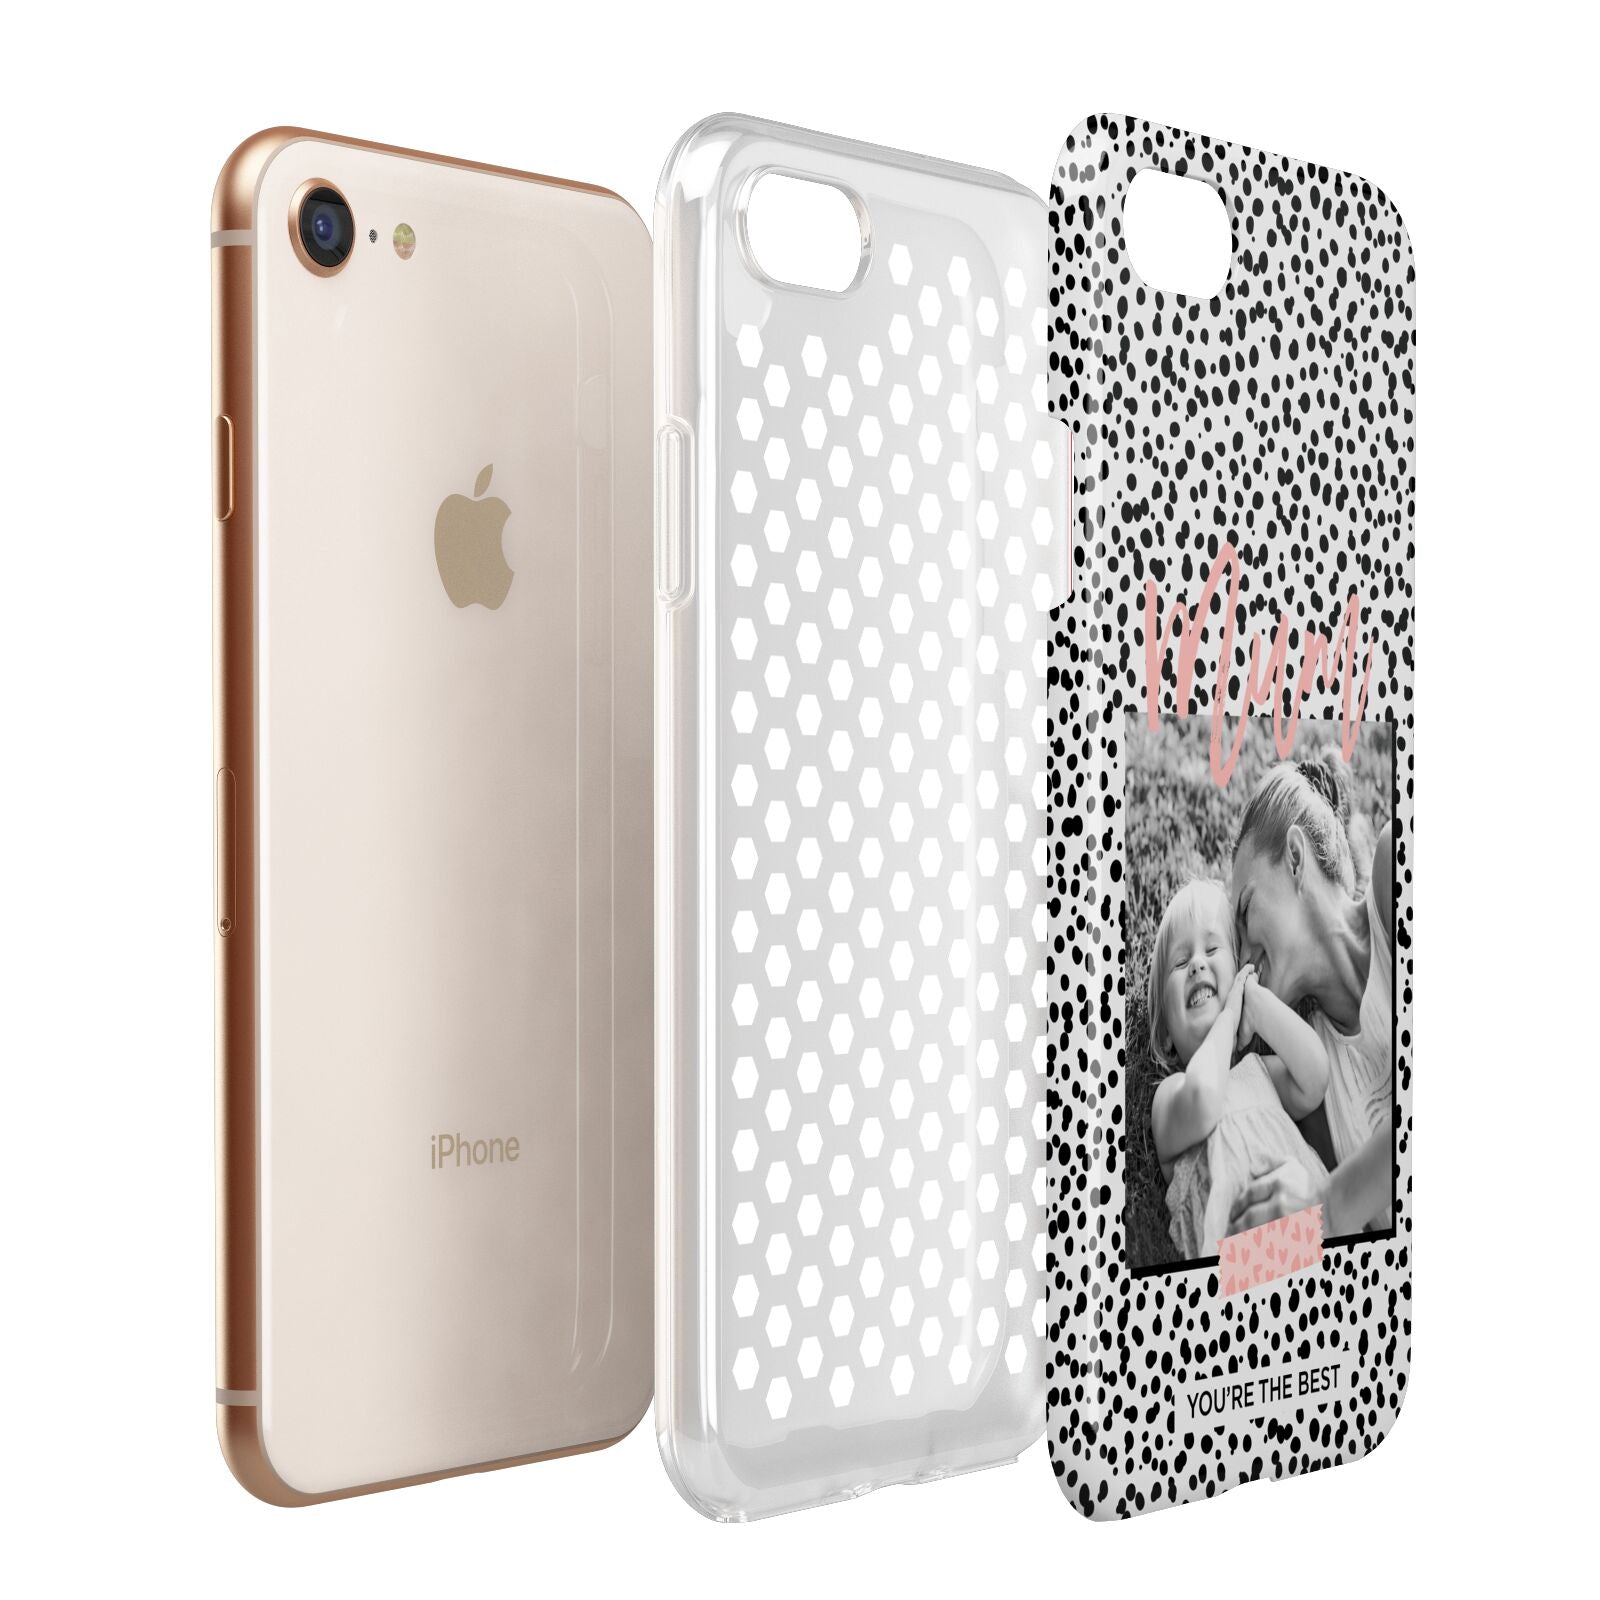 Polka Dot Mum Apple iPhone 7 8 3D Tough Case Expanded View